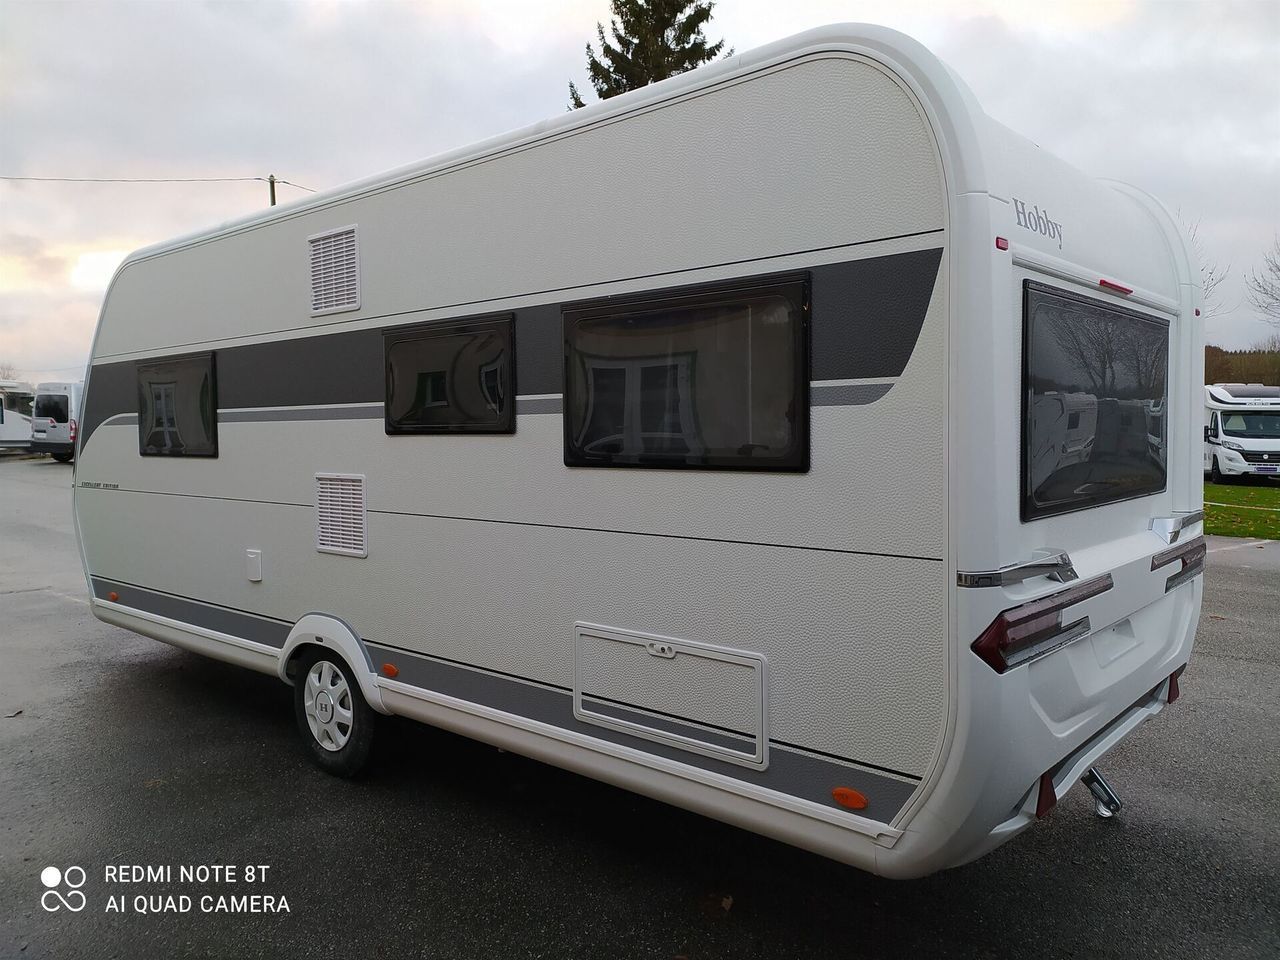 Caravane - Hobby - 540 UFF EXCELLENT EDITION 